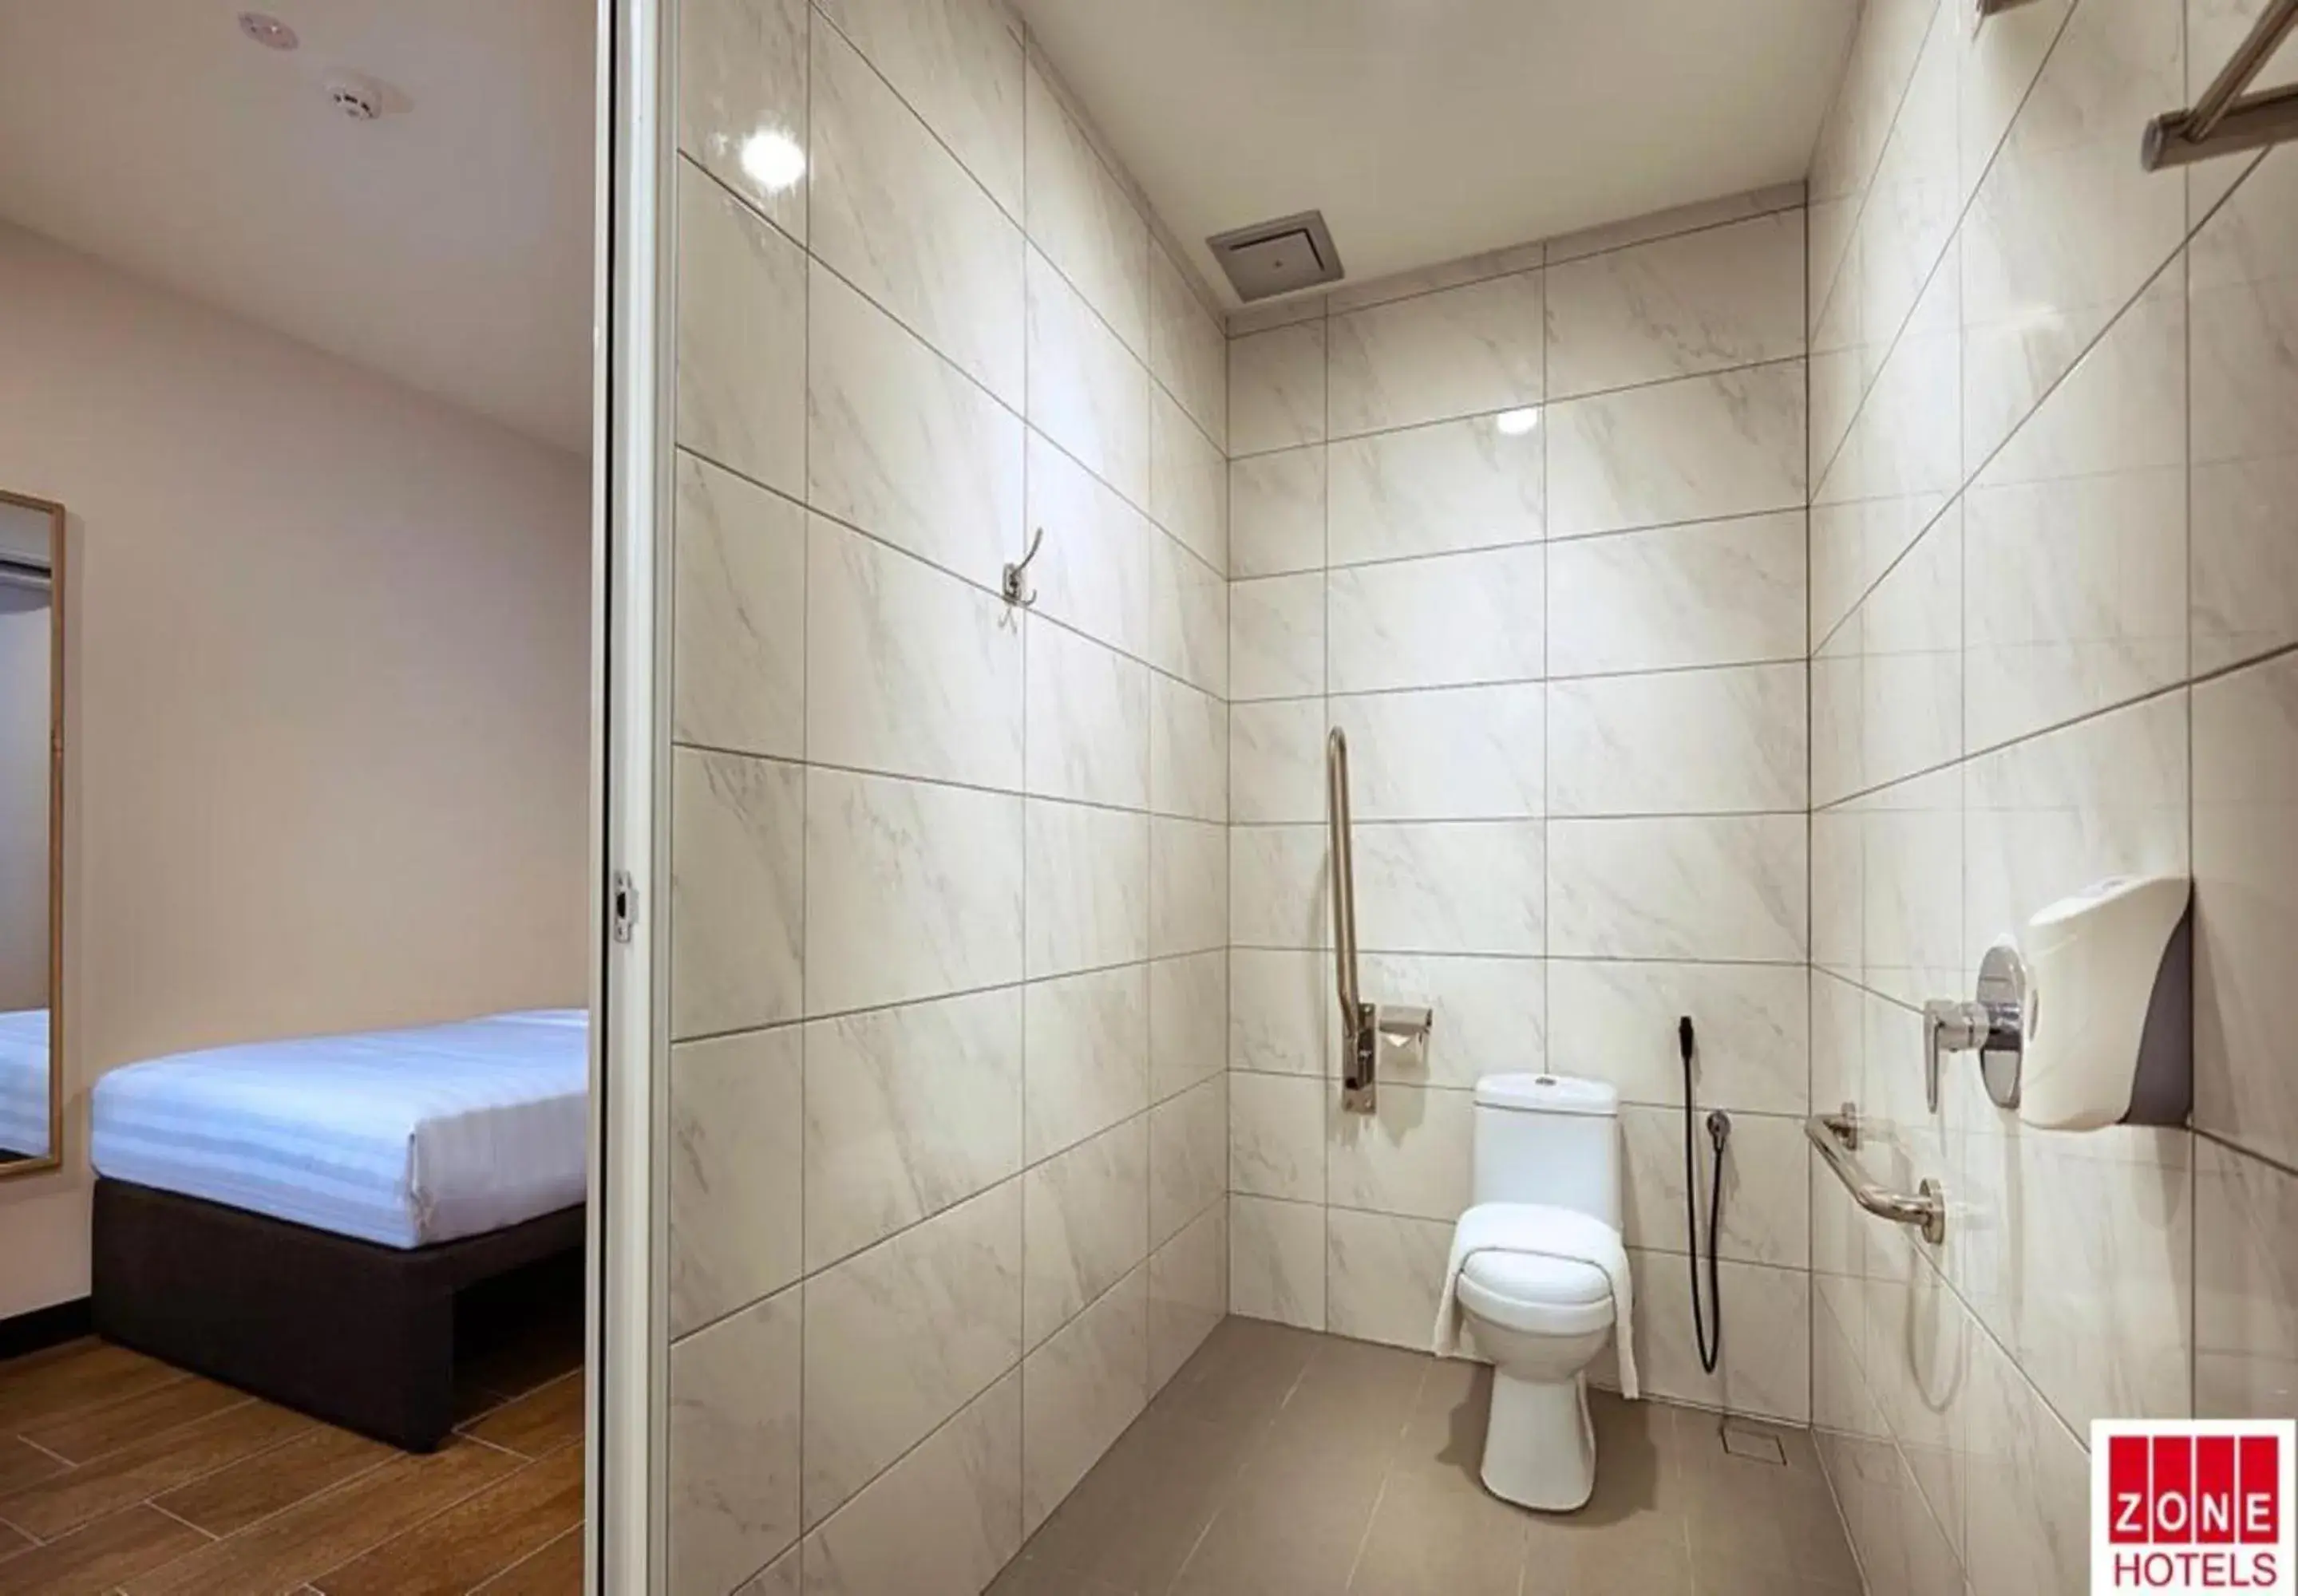 Bedroom, Bathroom in ZONE Hotels, Telok Panglima Garang